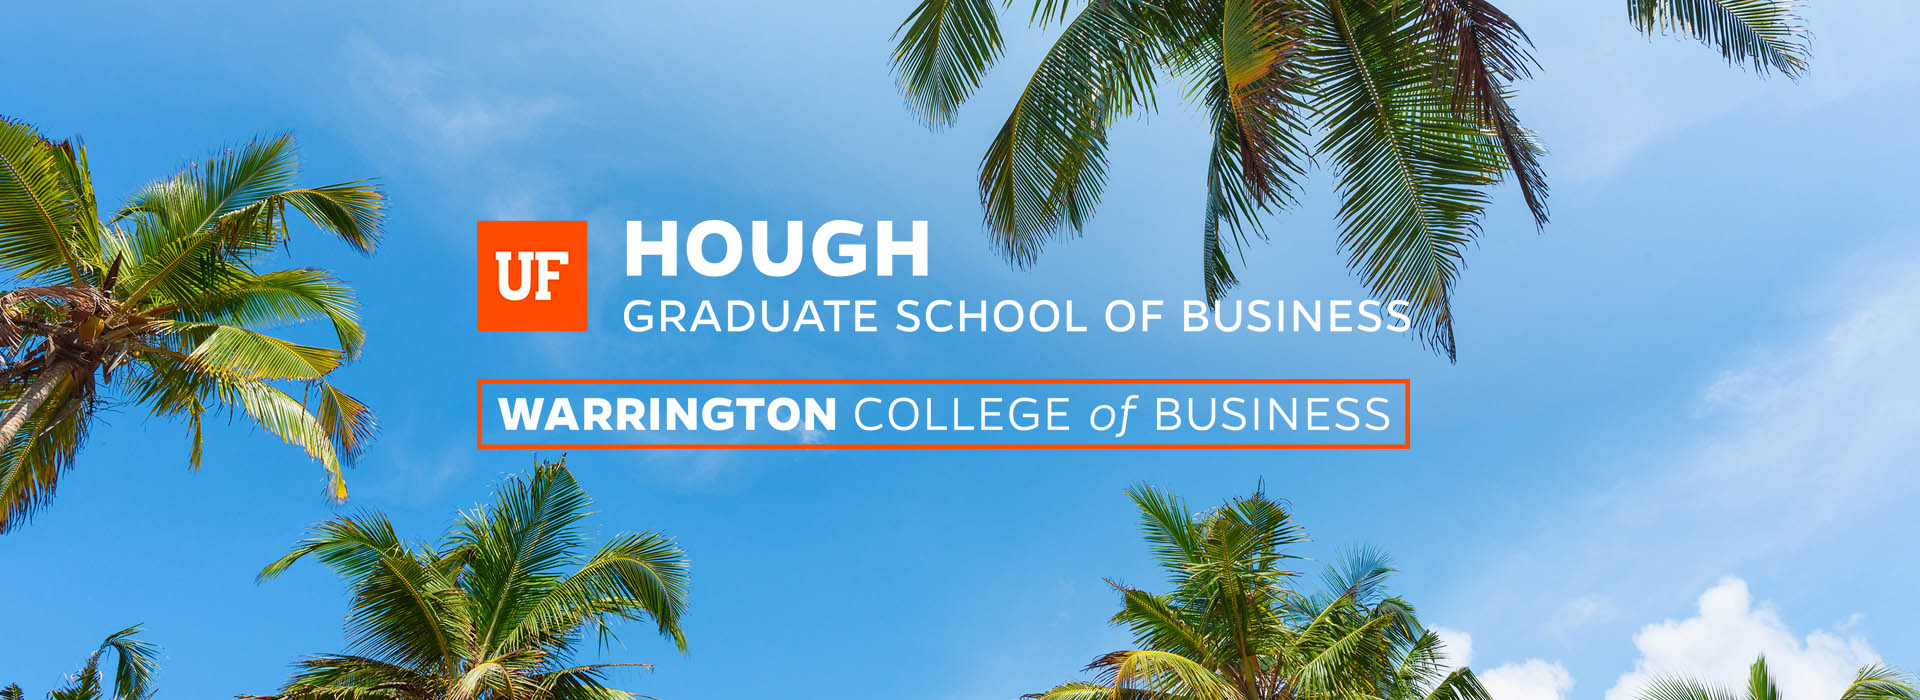 UF Hough Graduate School of Business | Warrington College of Business